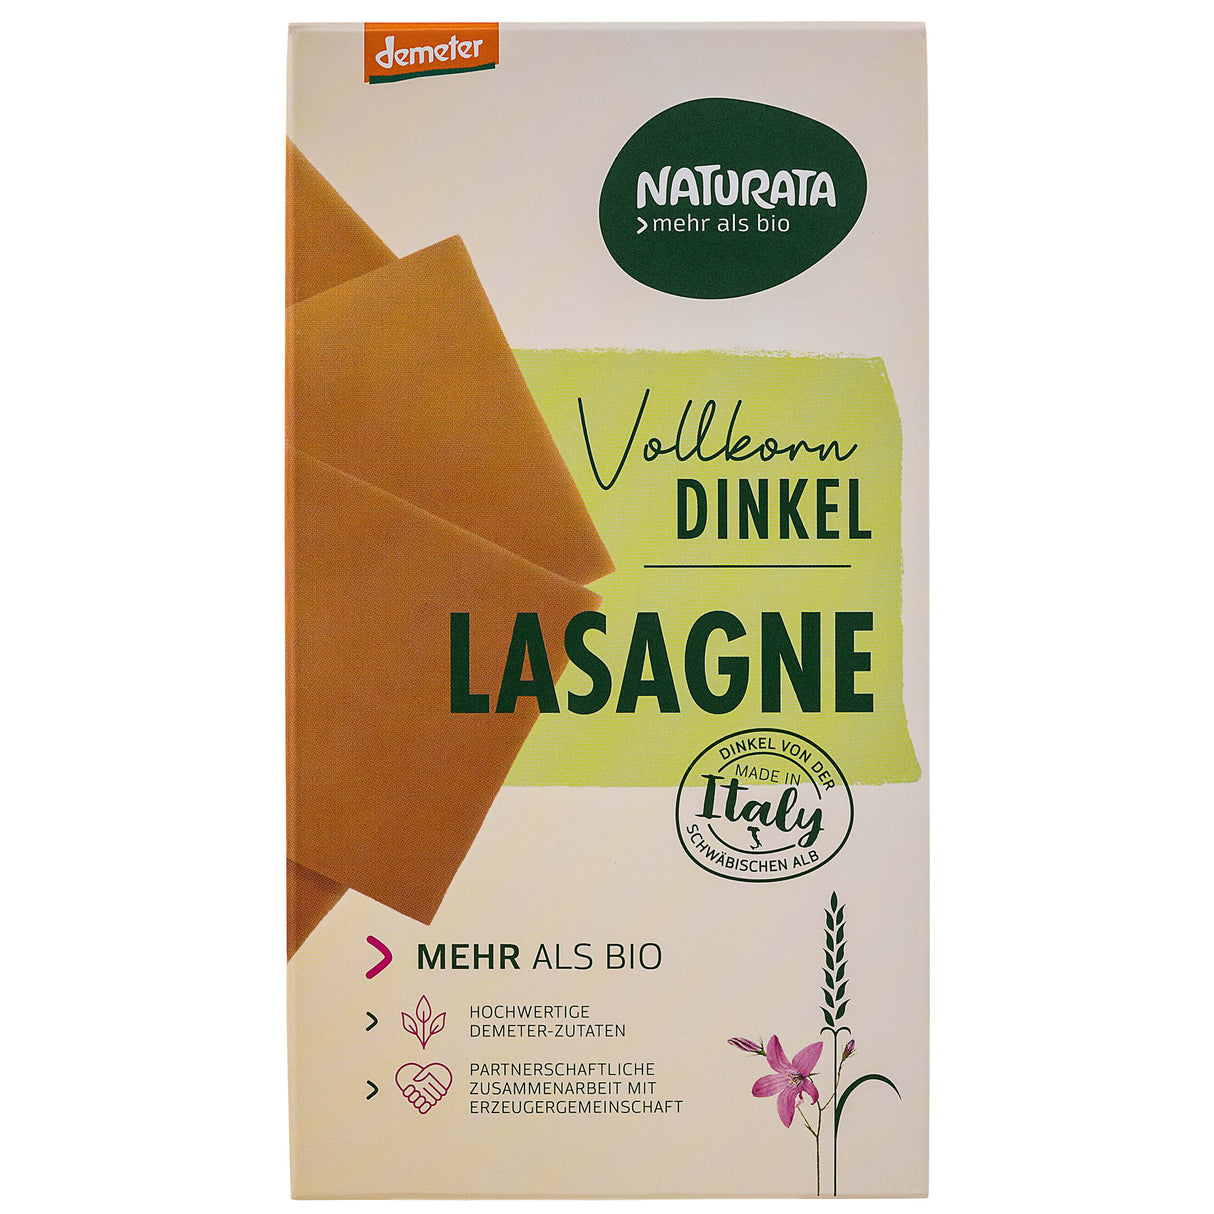 Bio Lasagne Dinkel Vollkorn demeter, 250 g